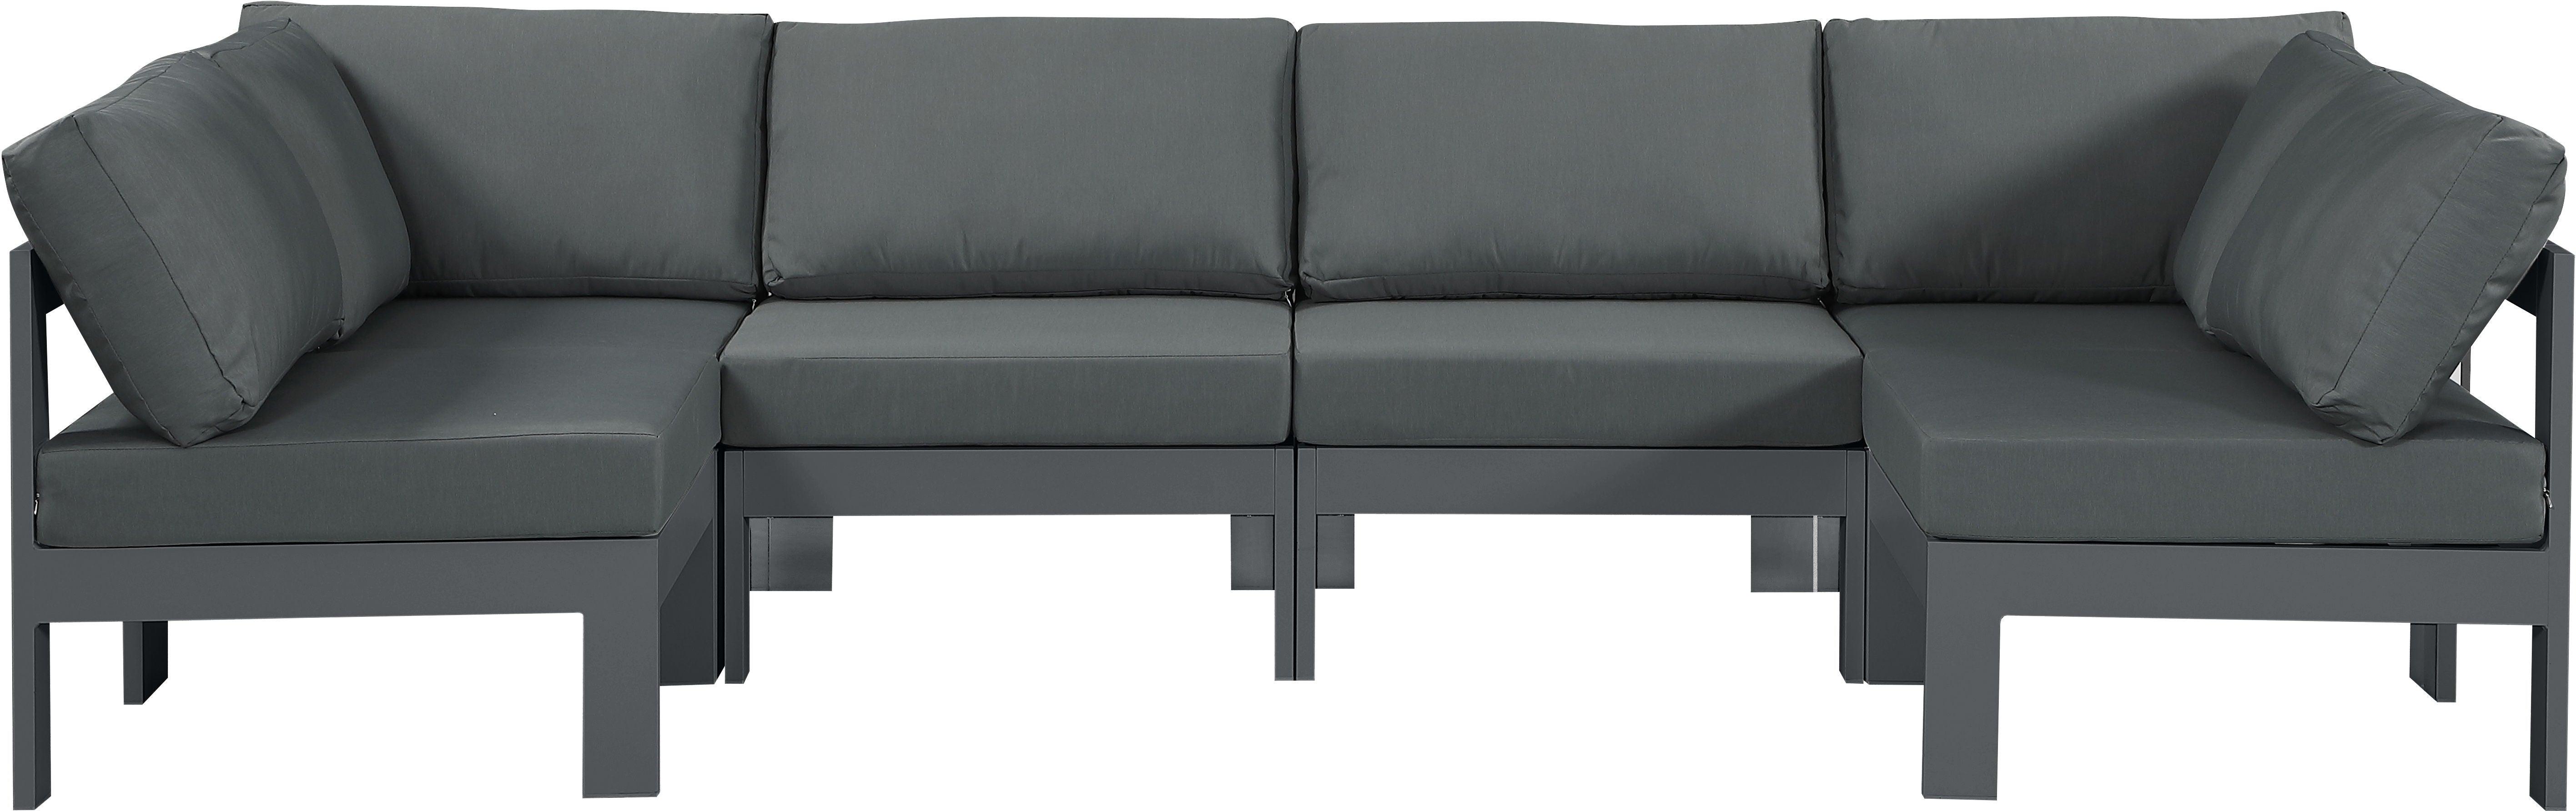 Meridian Furniture - Nizuc - Outdoor Patio Modular Sectional - Grey - 5th Avenue Furniture